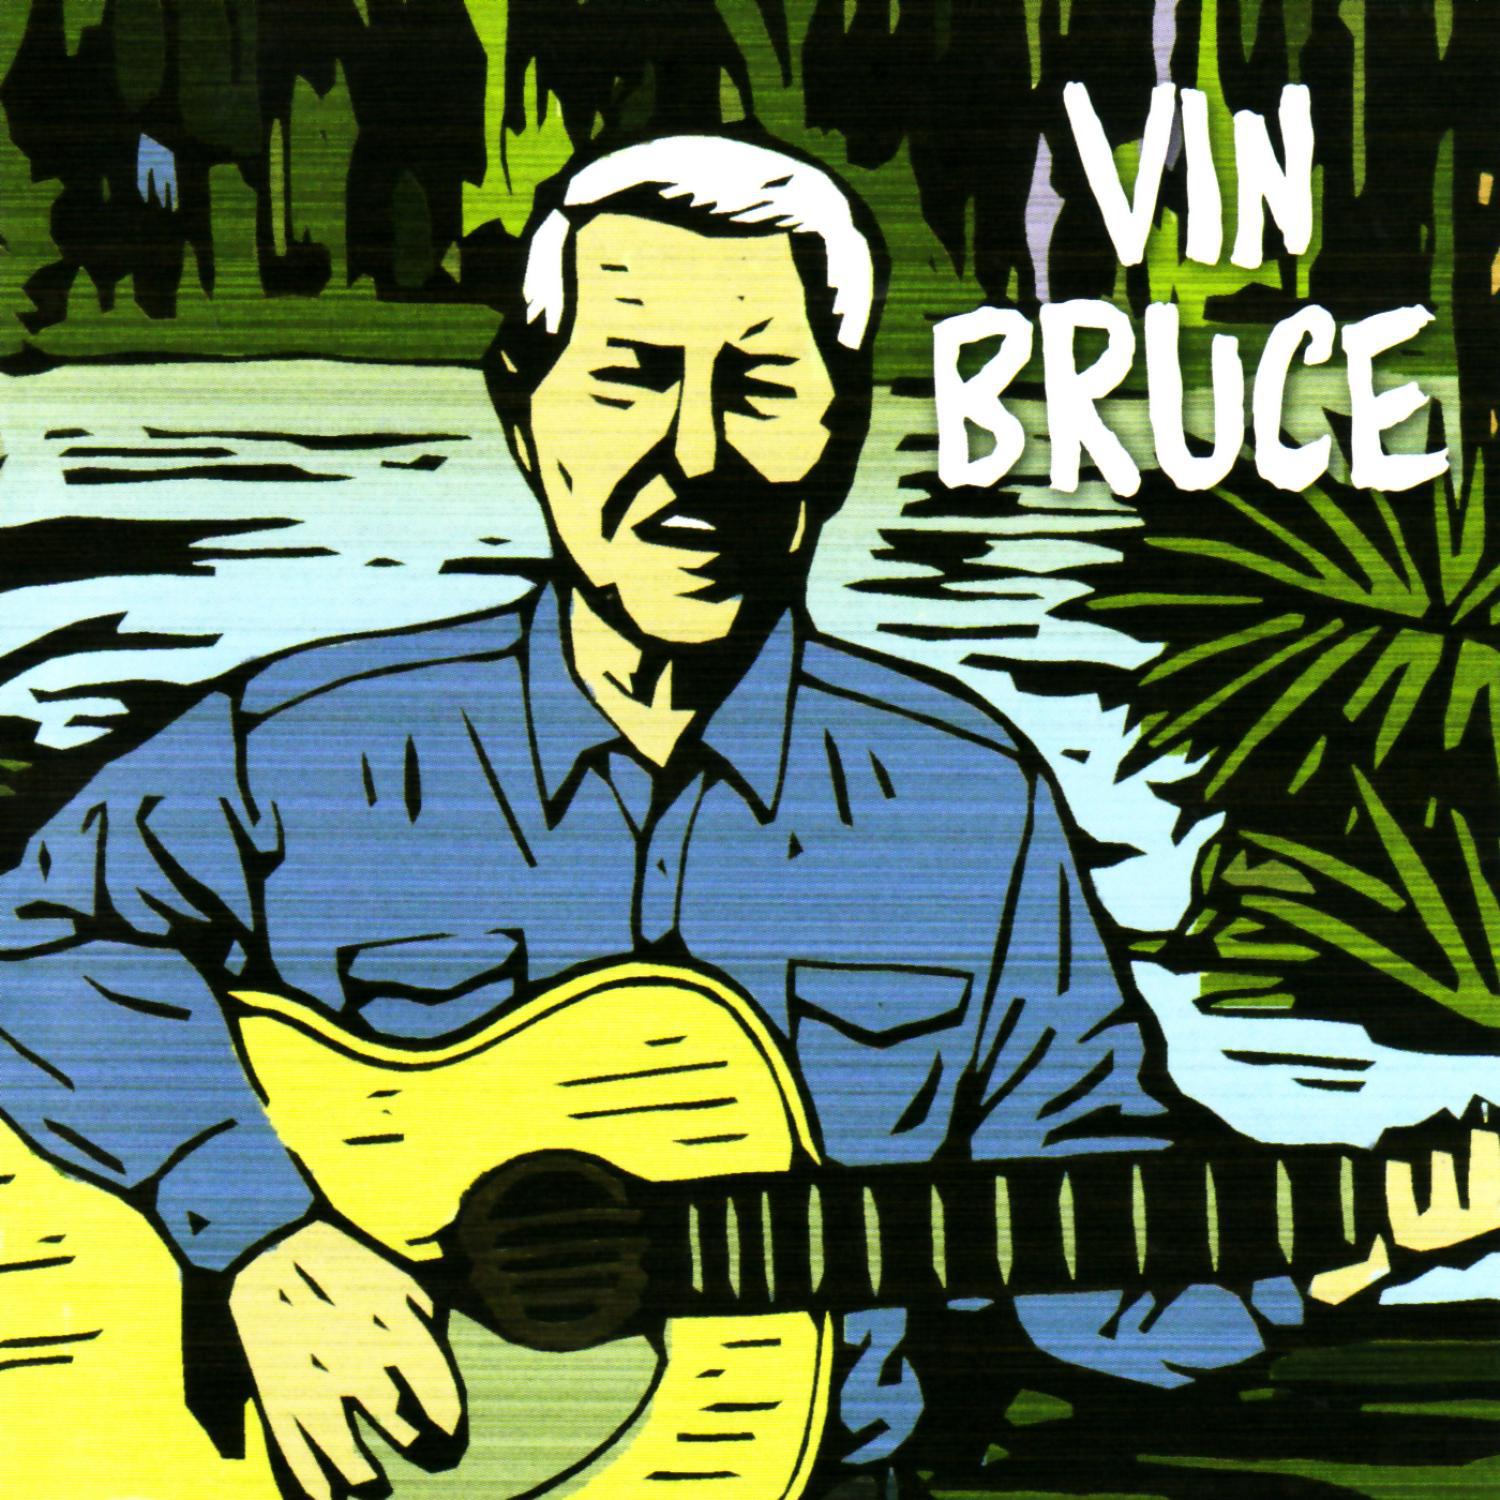 Vin Bruce - Les Cadjins du Bayou